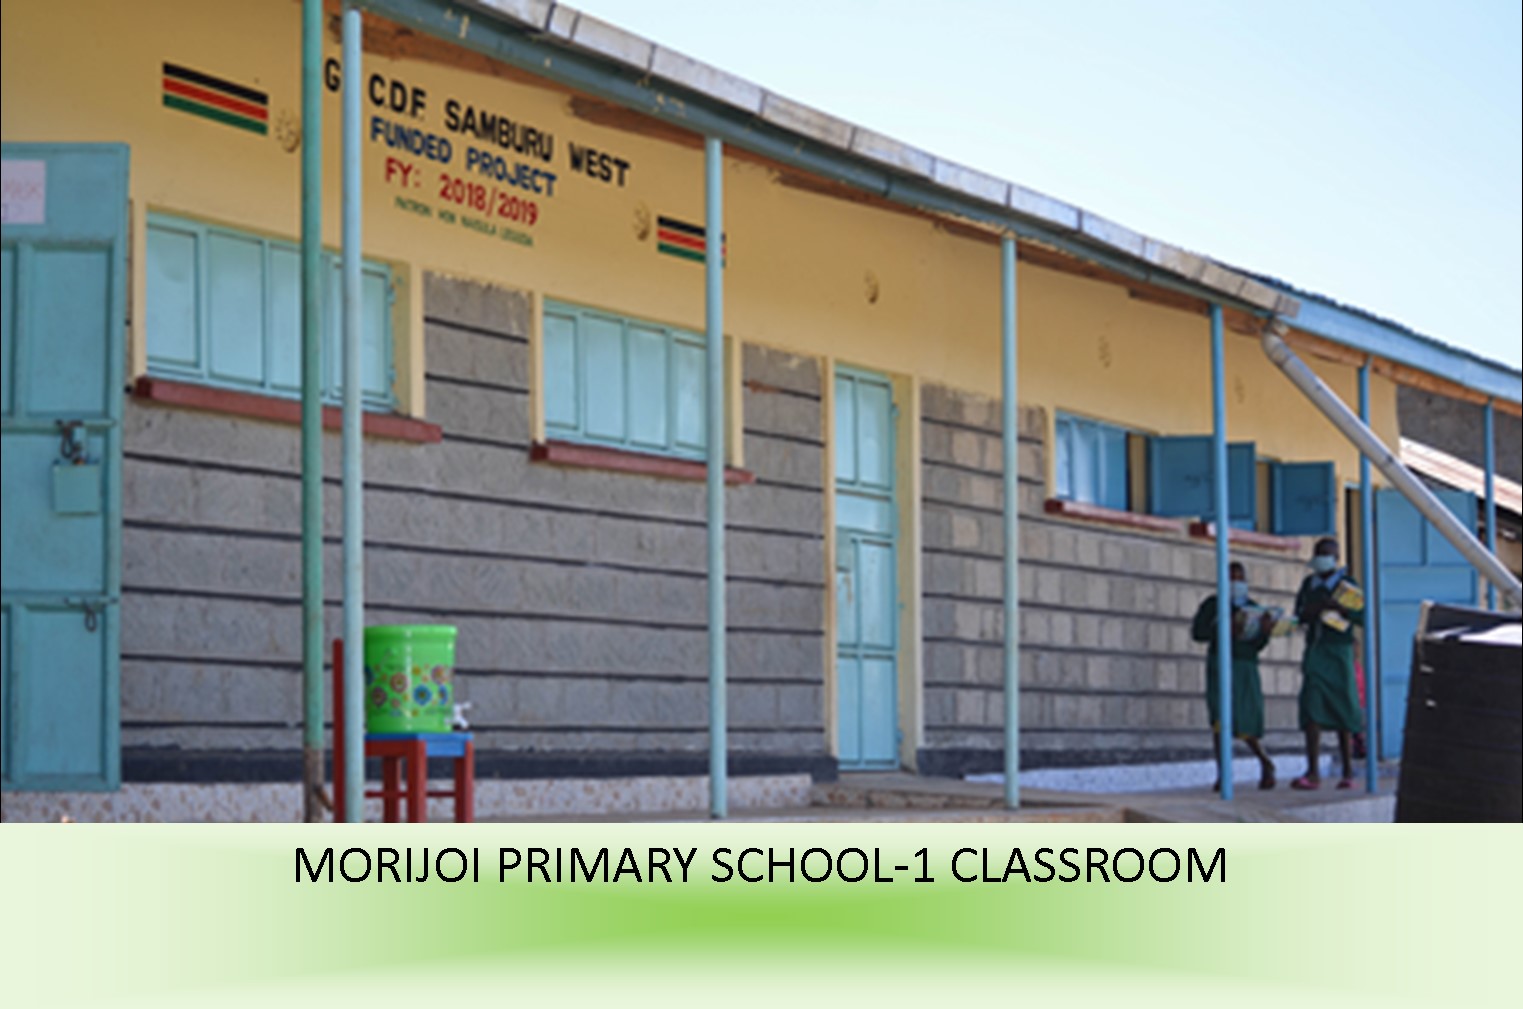 https://samburu-west.ngcdf.go.ke/wp-content/uploads/2021/08/morijoi-primary-school-1-classroom.jpg